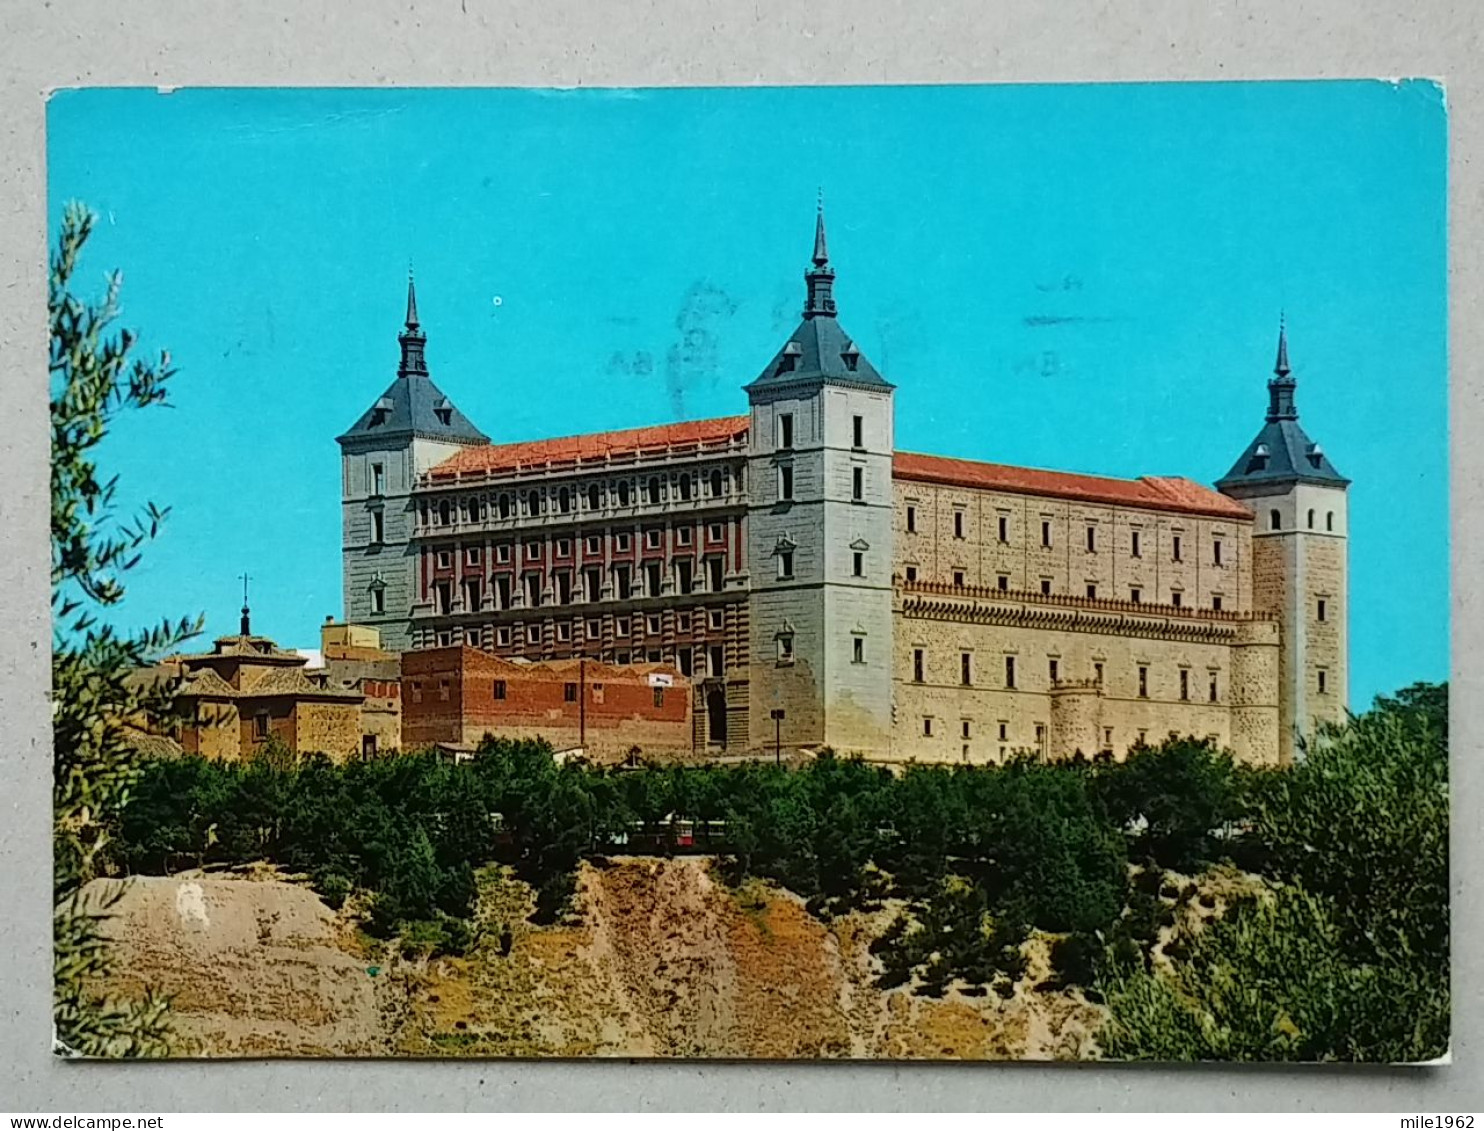 KOV 781-1 - TOLEDO, SPAIN - Toledo